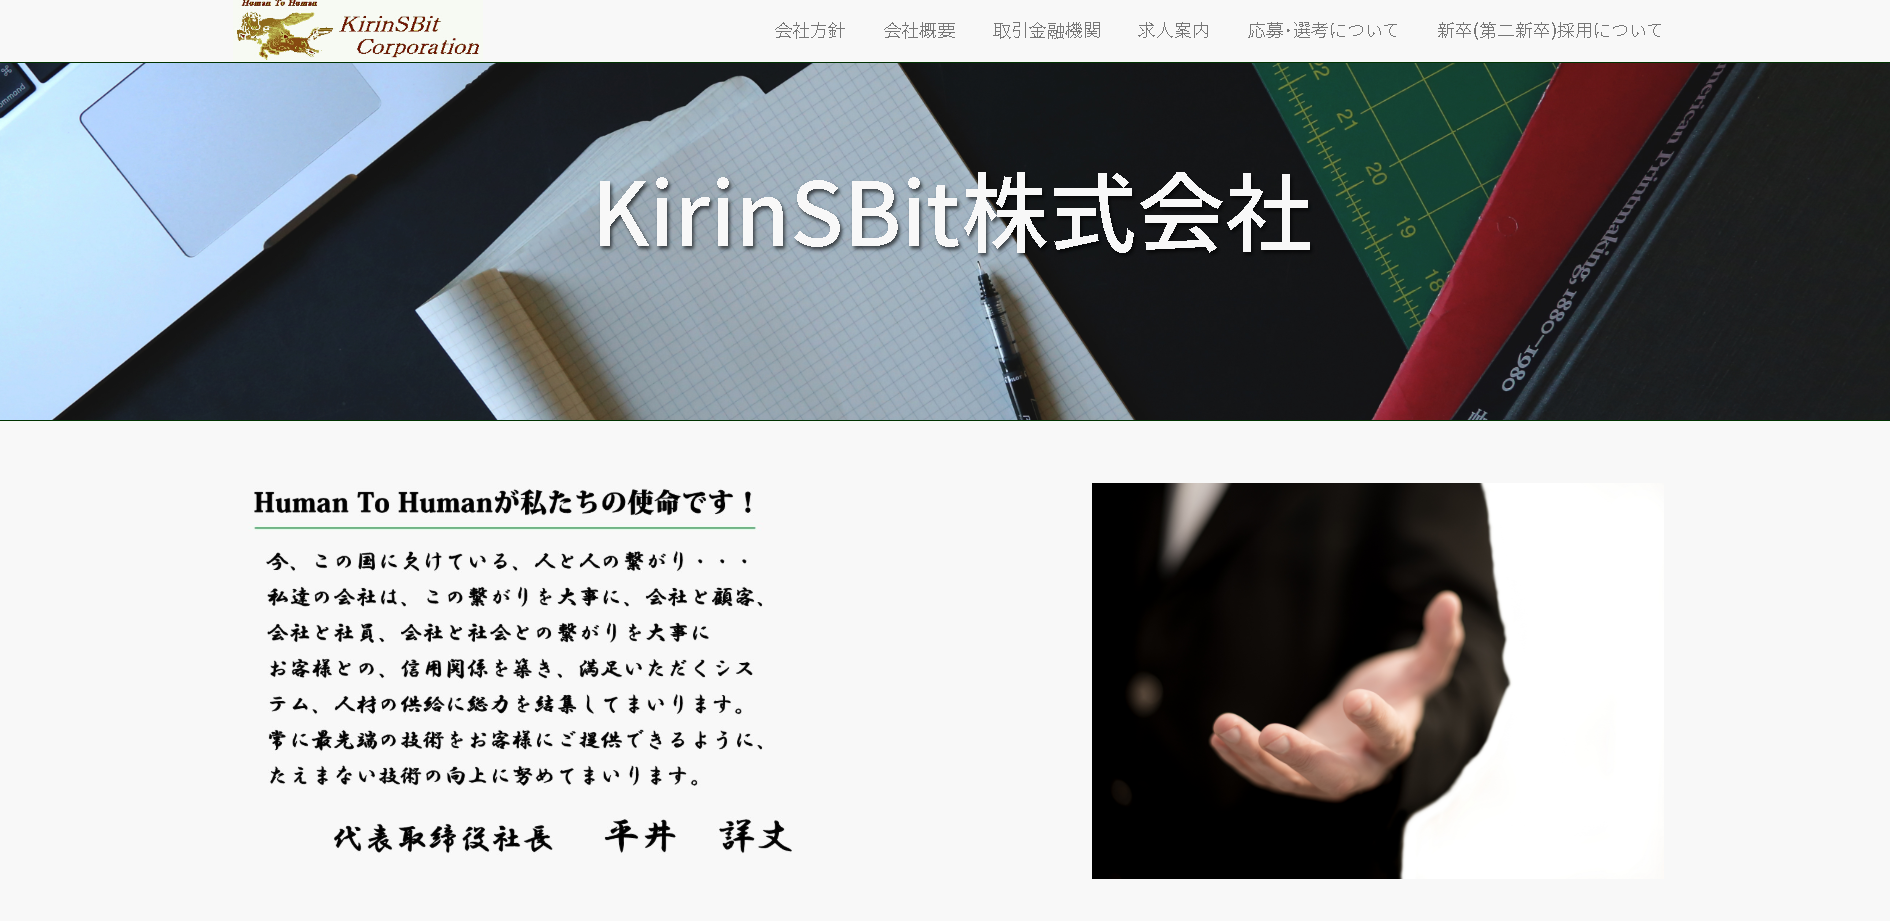 KirinSBit 株式会社のKirinSBitサービス